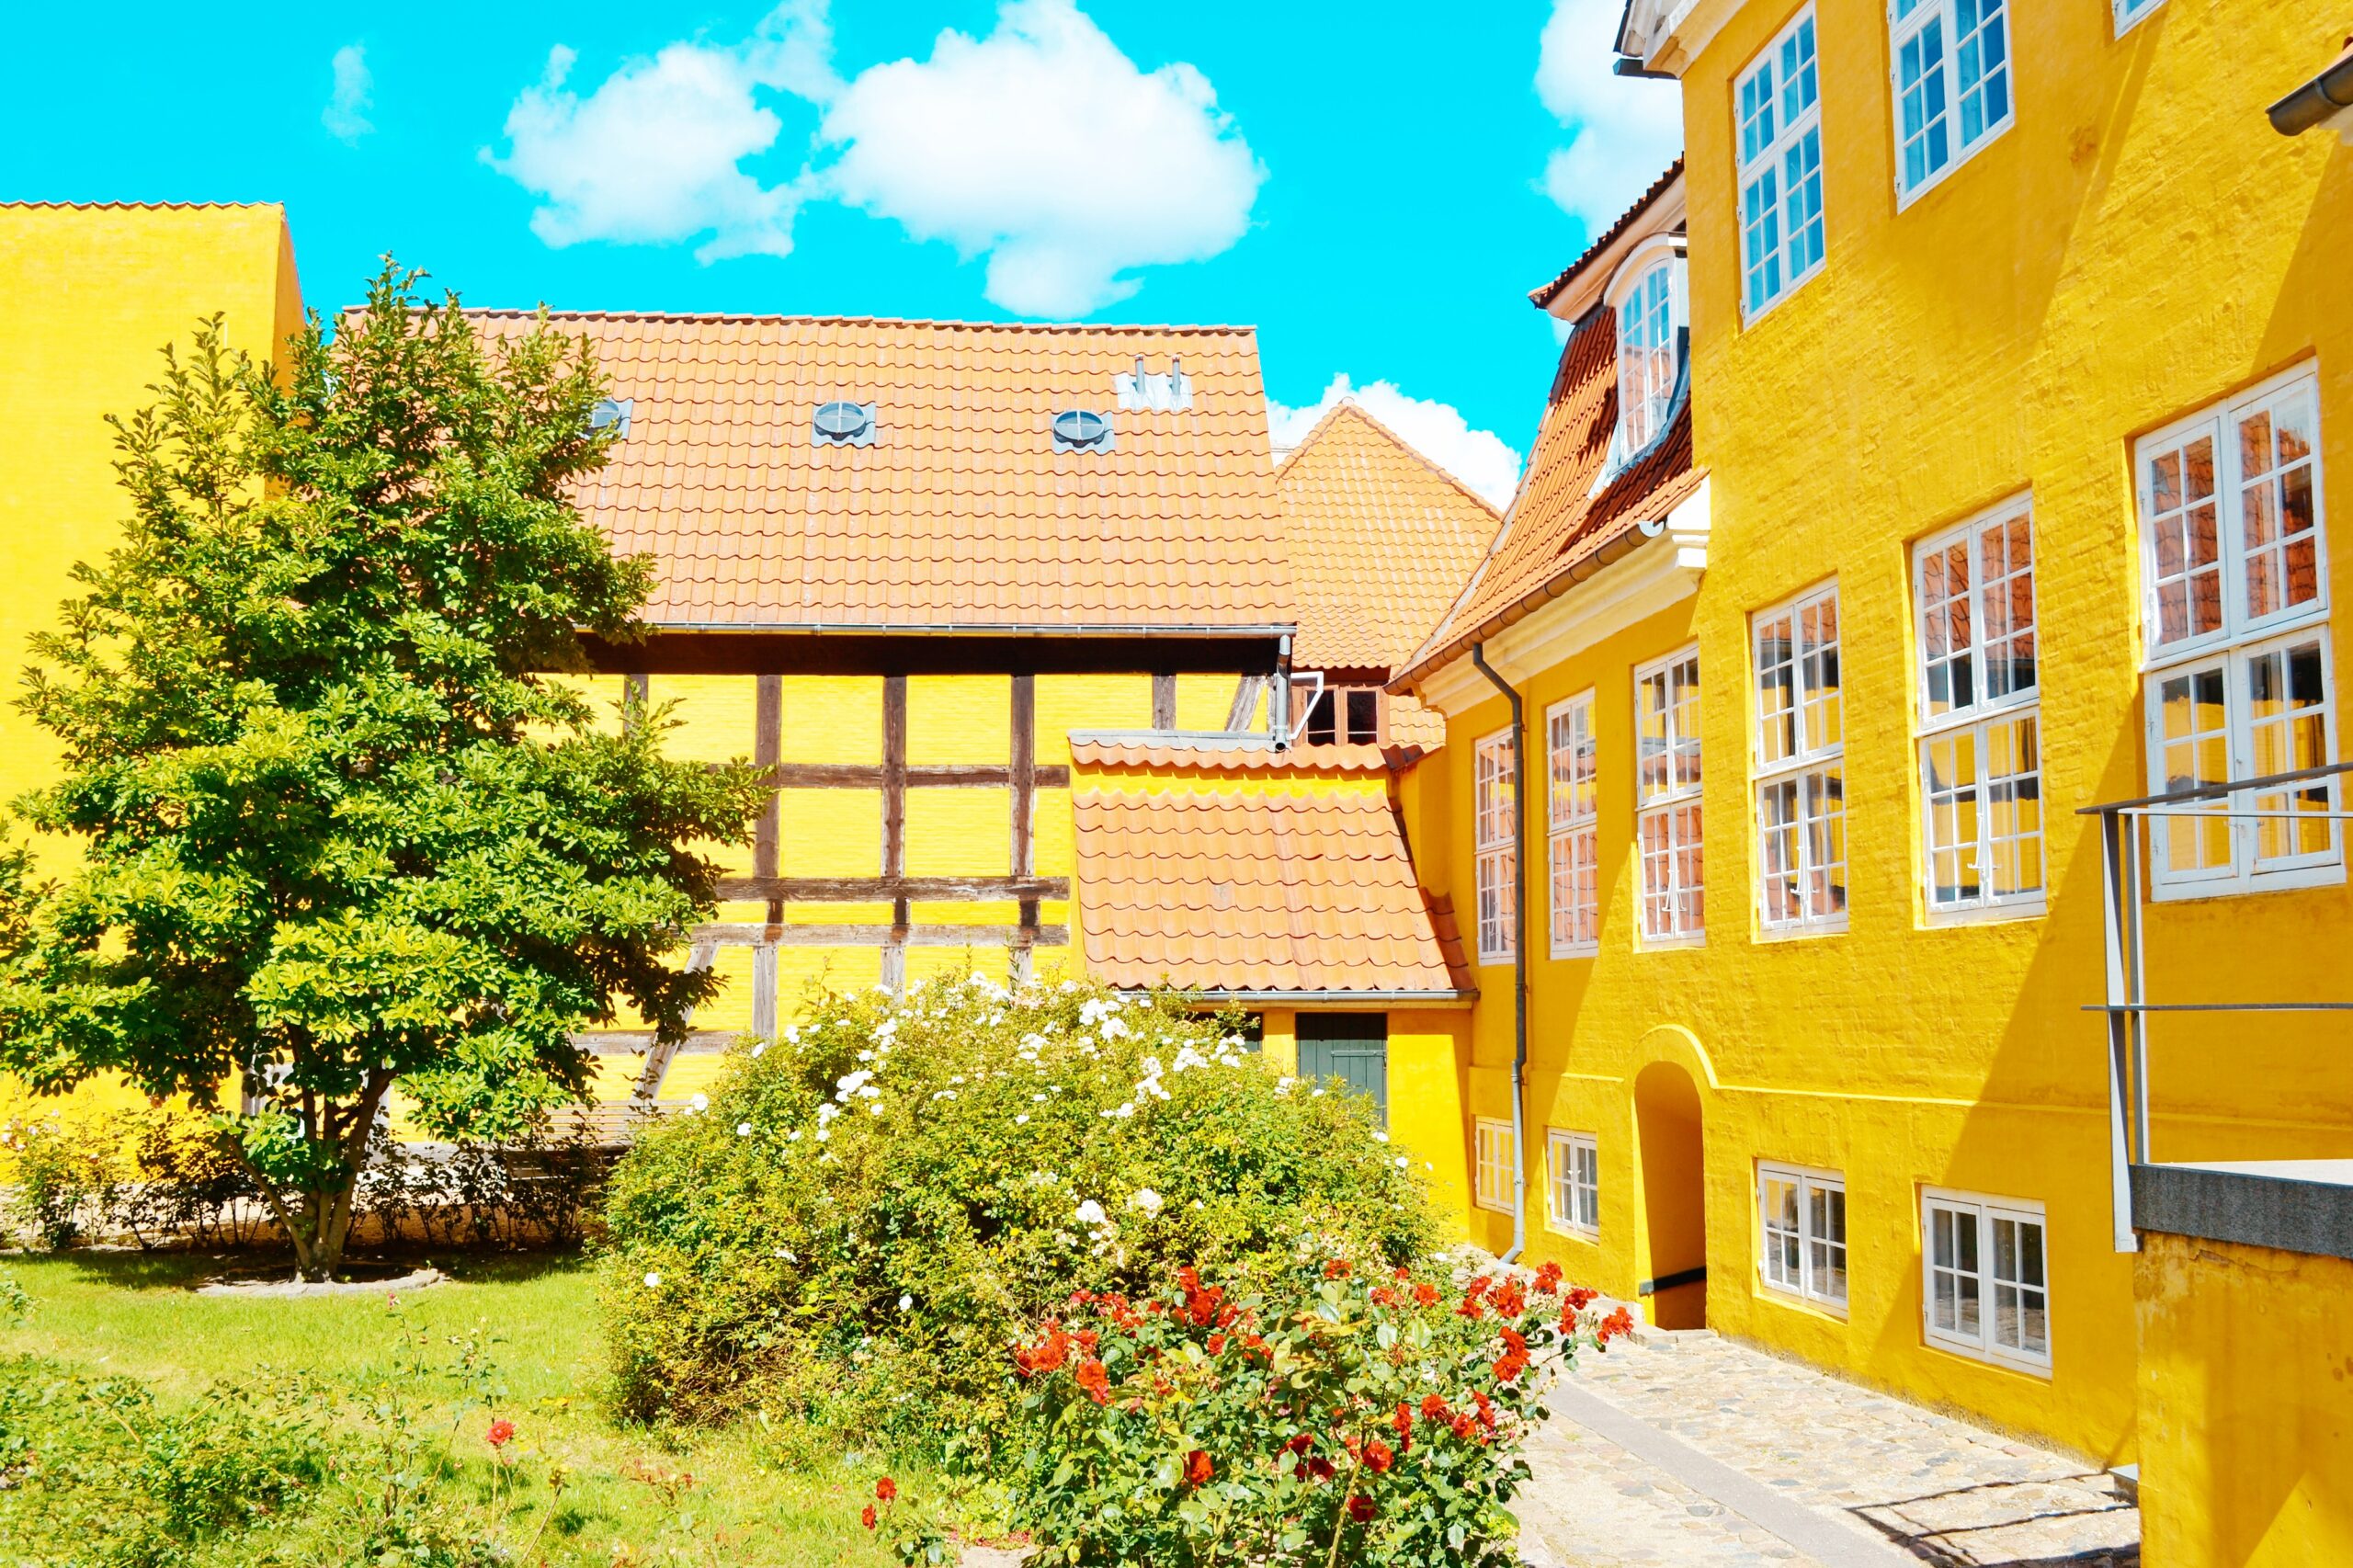 <img src="yellow.jpg" alt="yellow dream home in Denmark/>